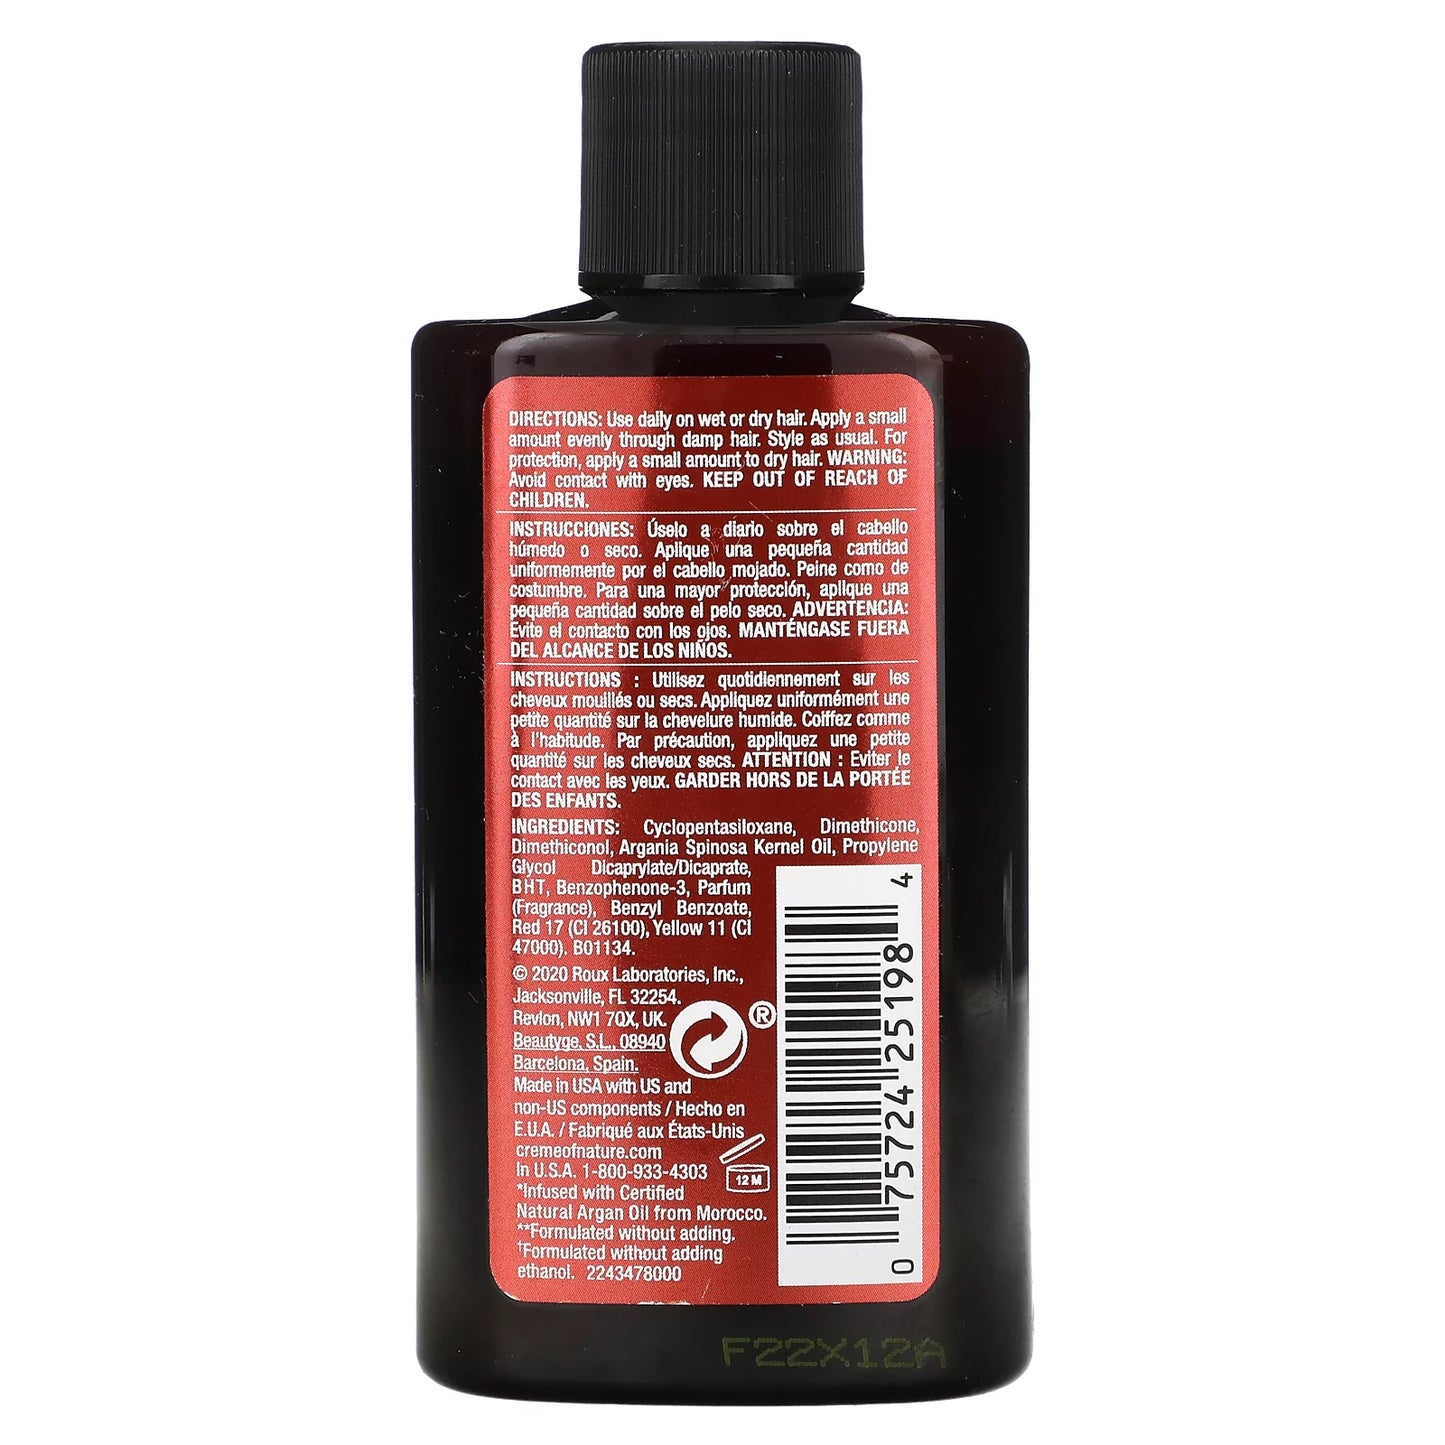 Creme of nature argan oil treatment 3 oz